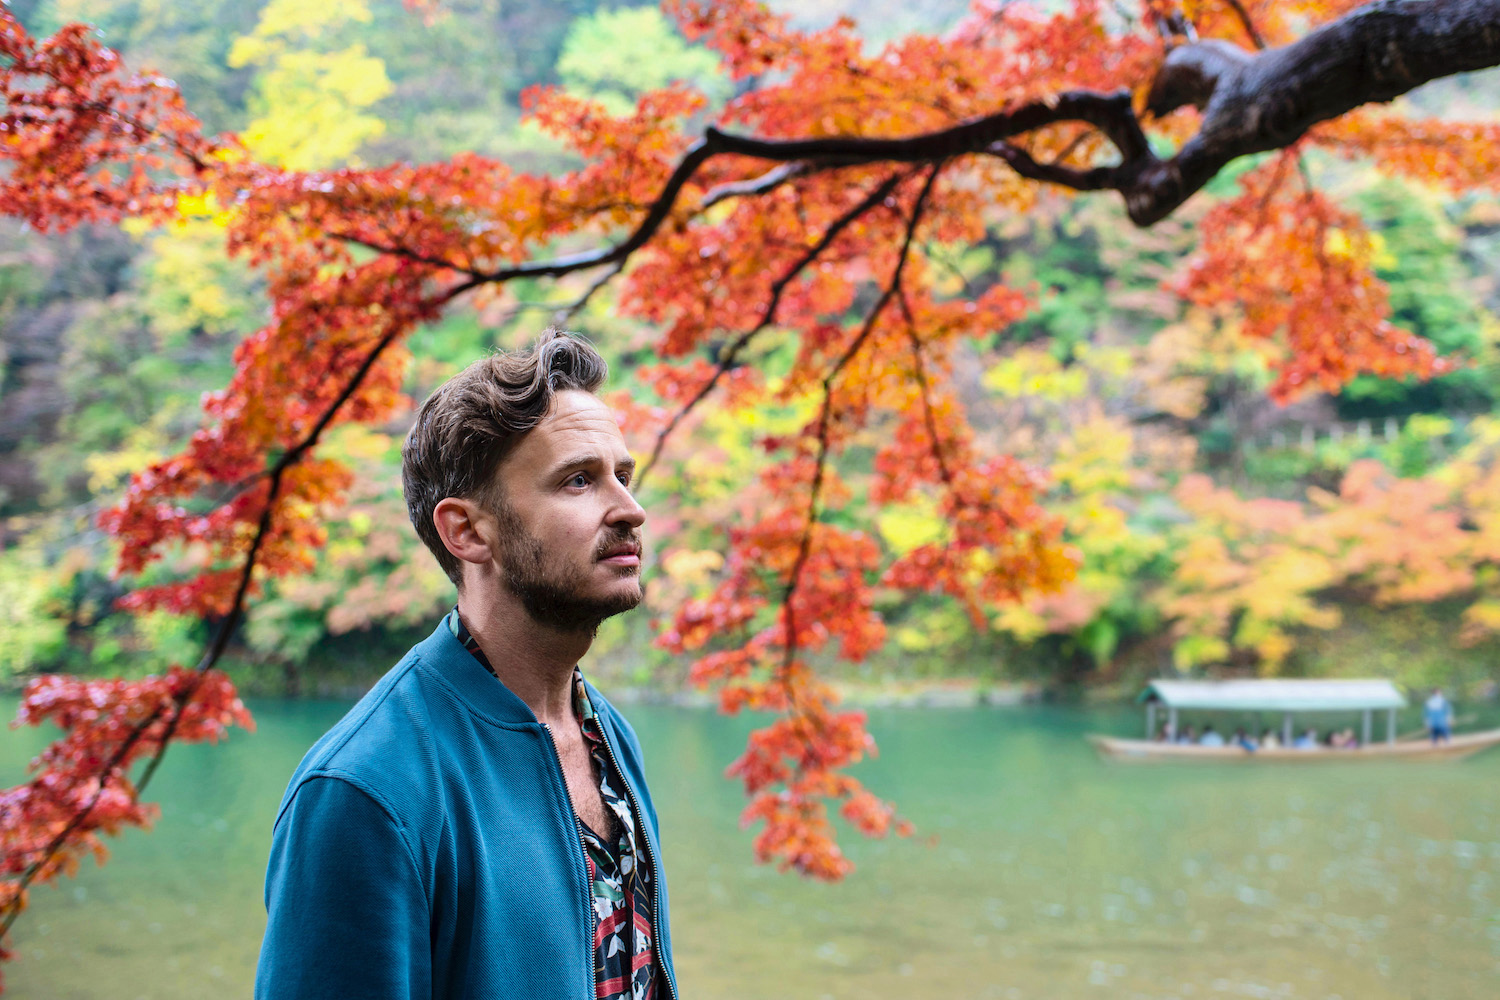 Scene from autumn in Kyoto